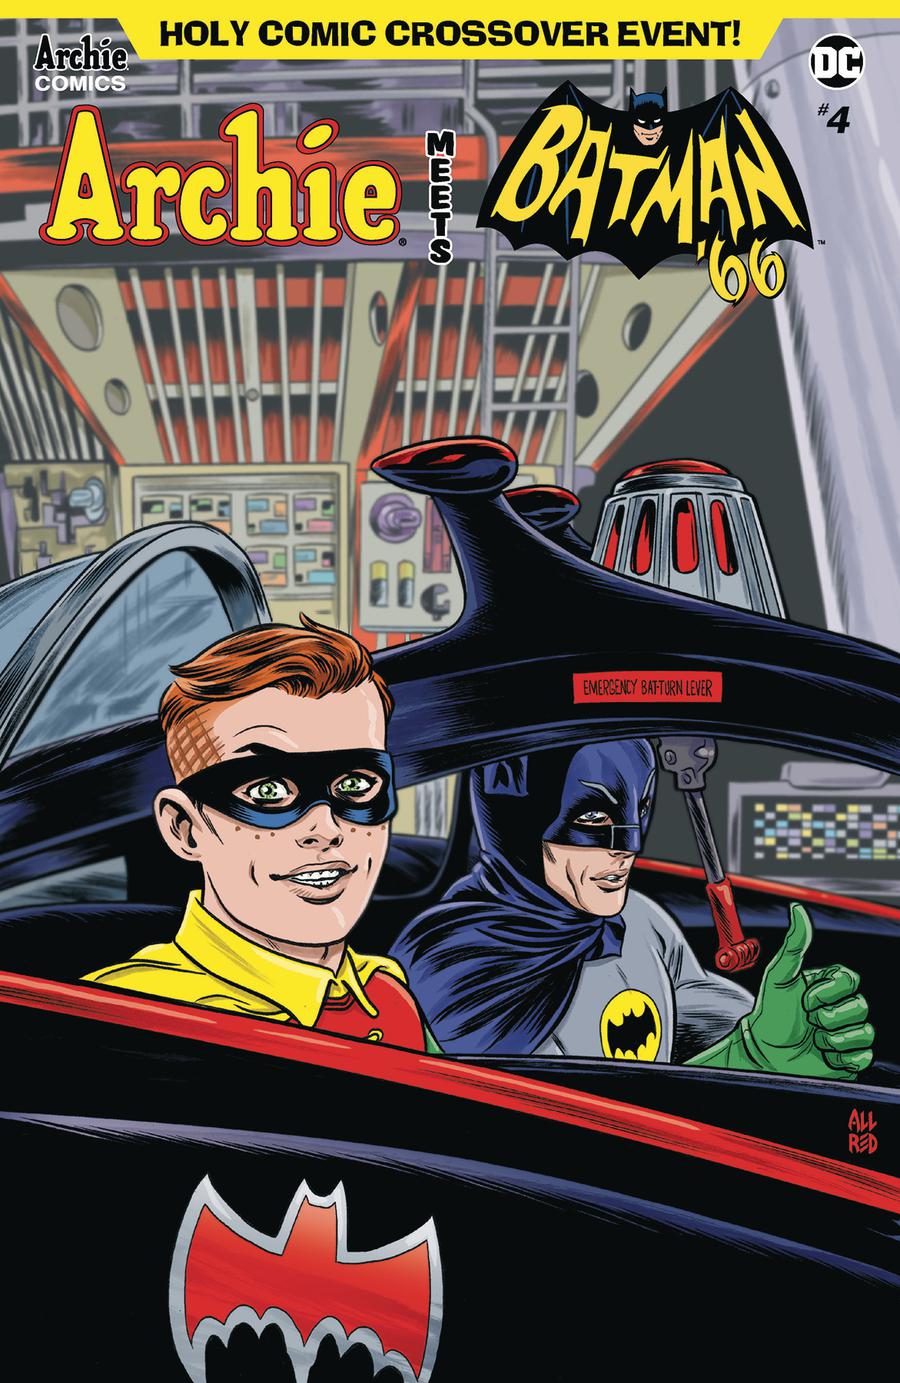 Archie Meets Batman 66 #4 Cover A Regular Michael Allred & Laura Allred Cover